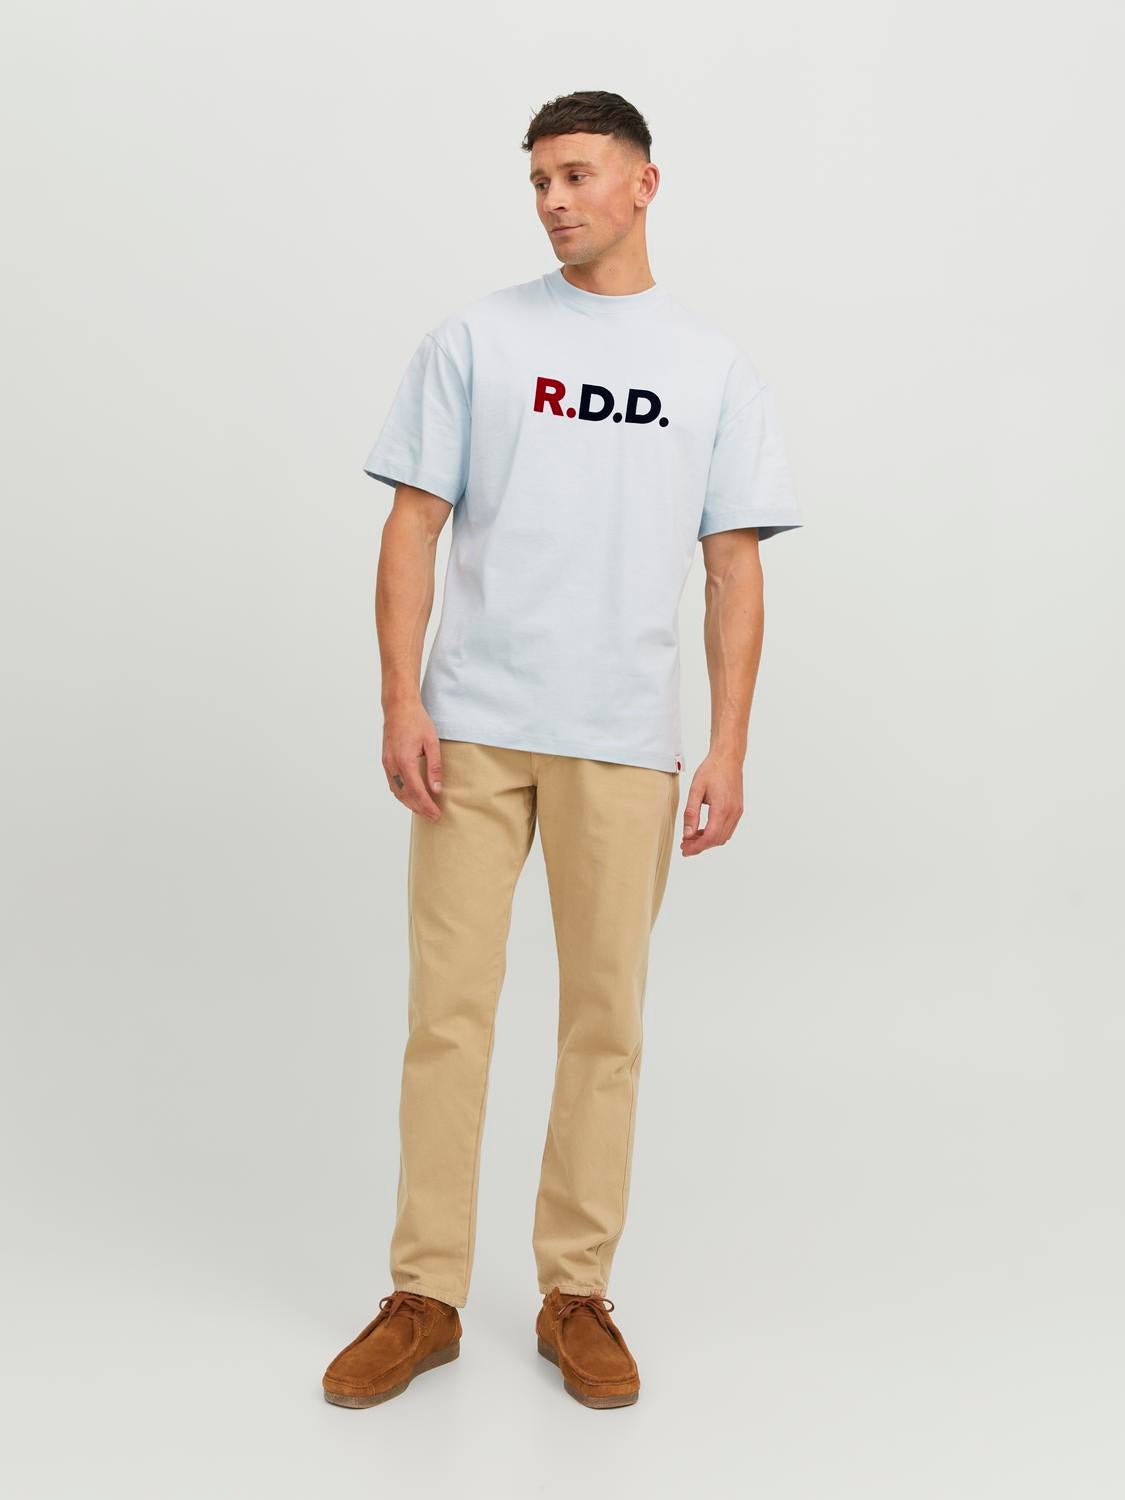 RDD Καλοκαιρινό μπλουζάκι